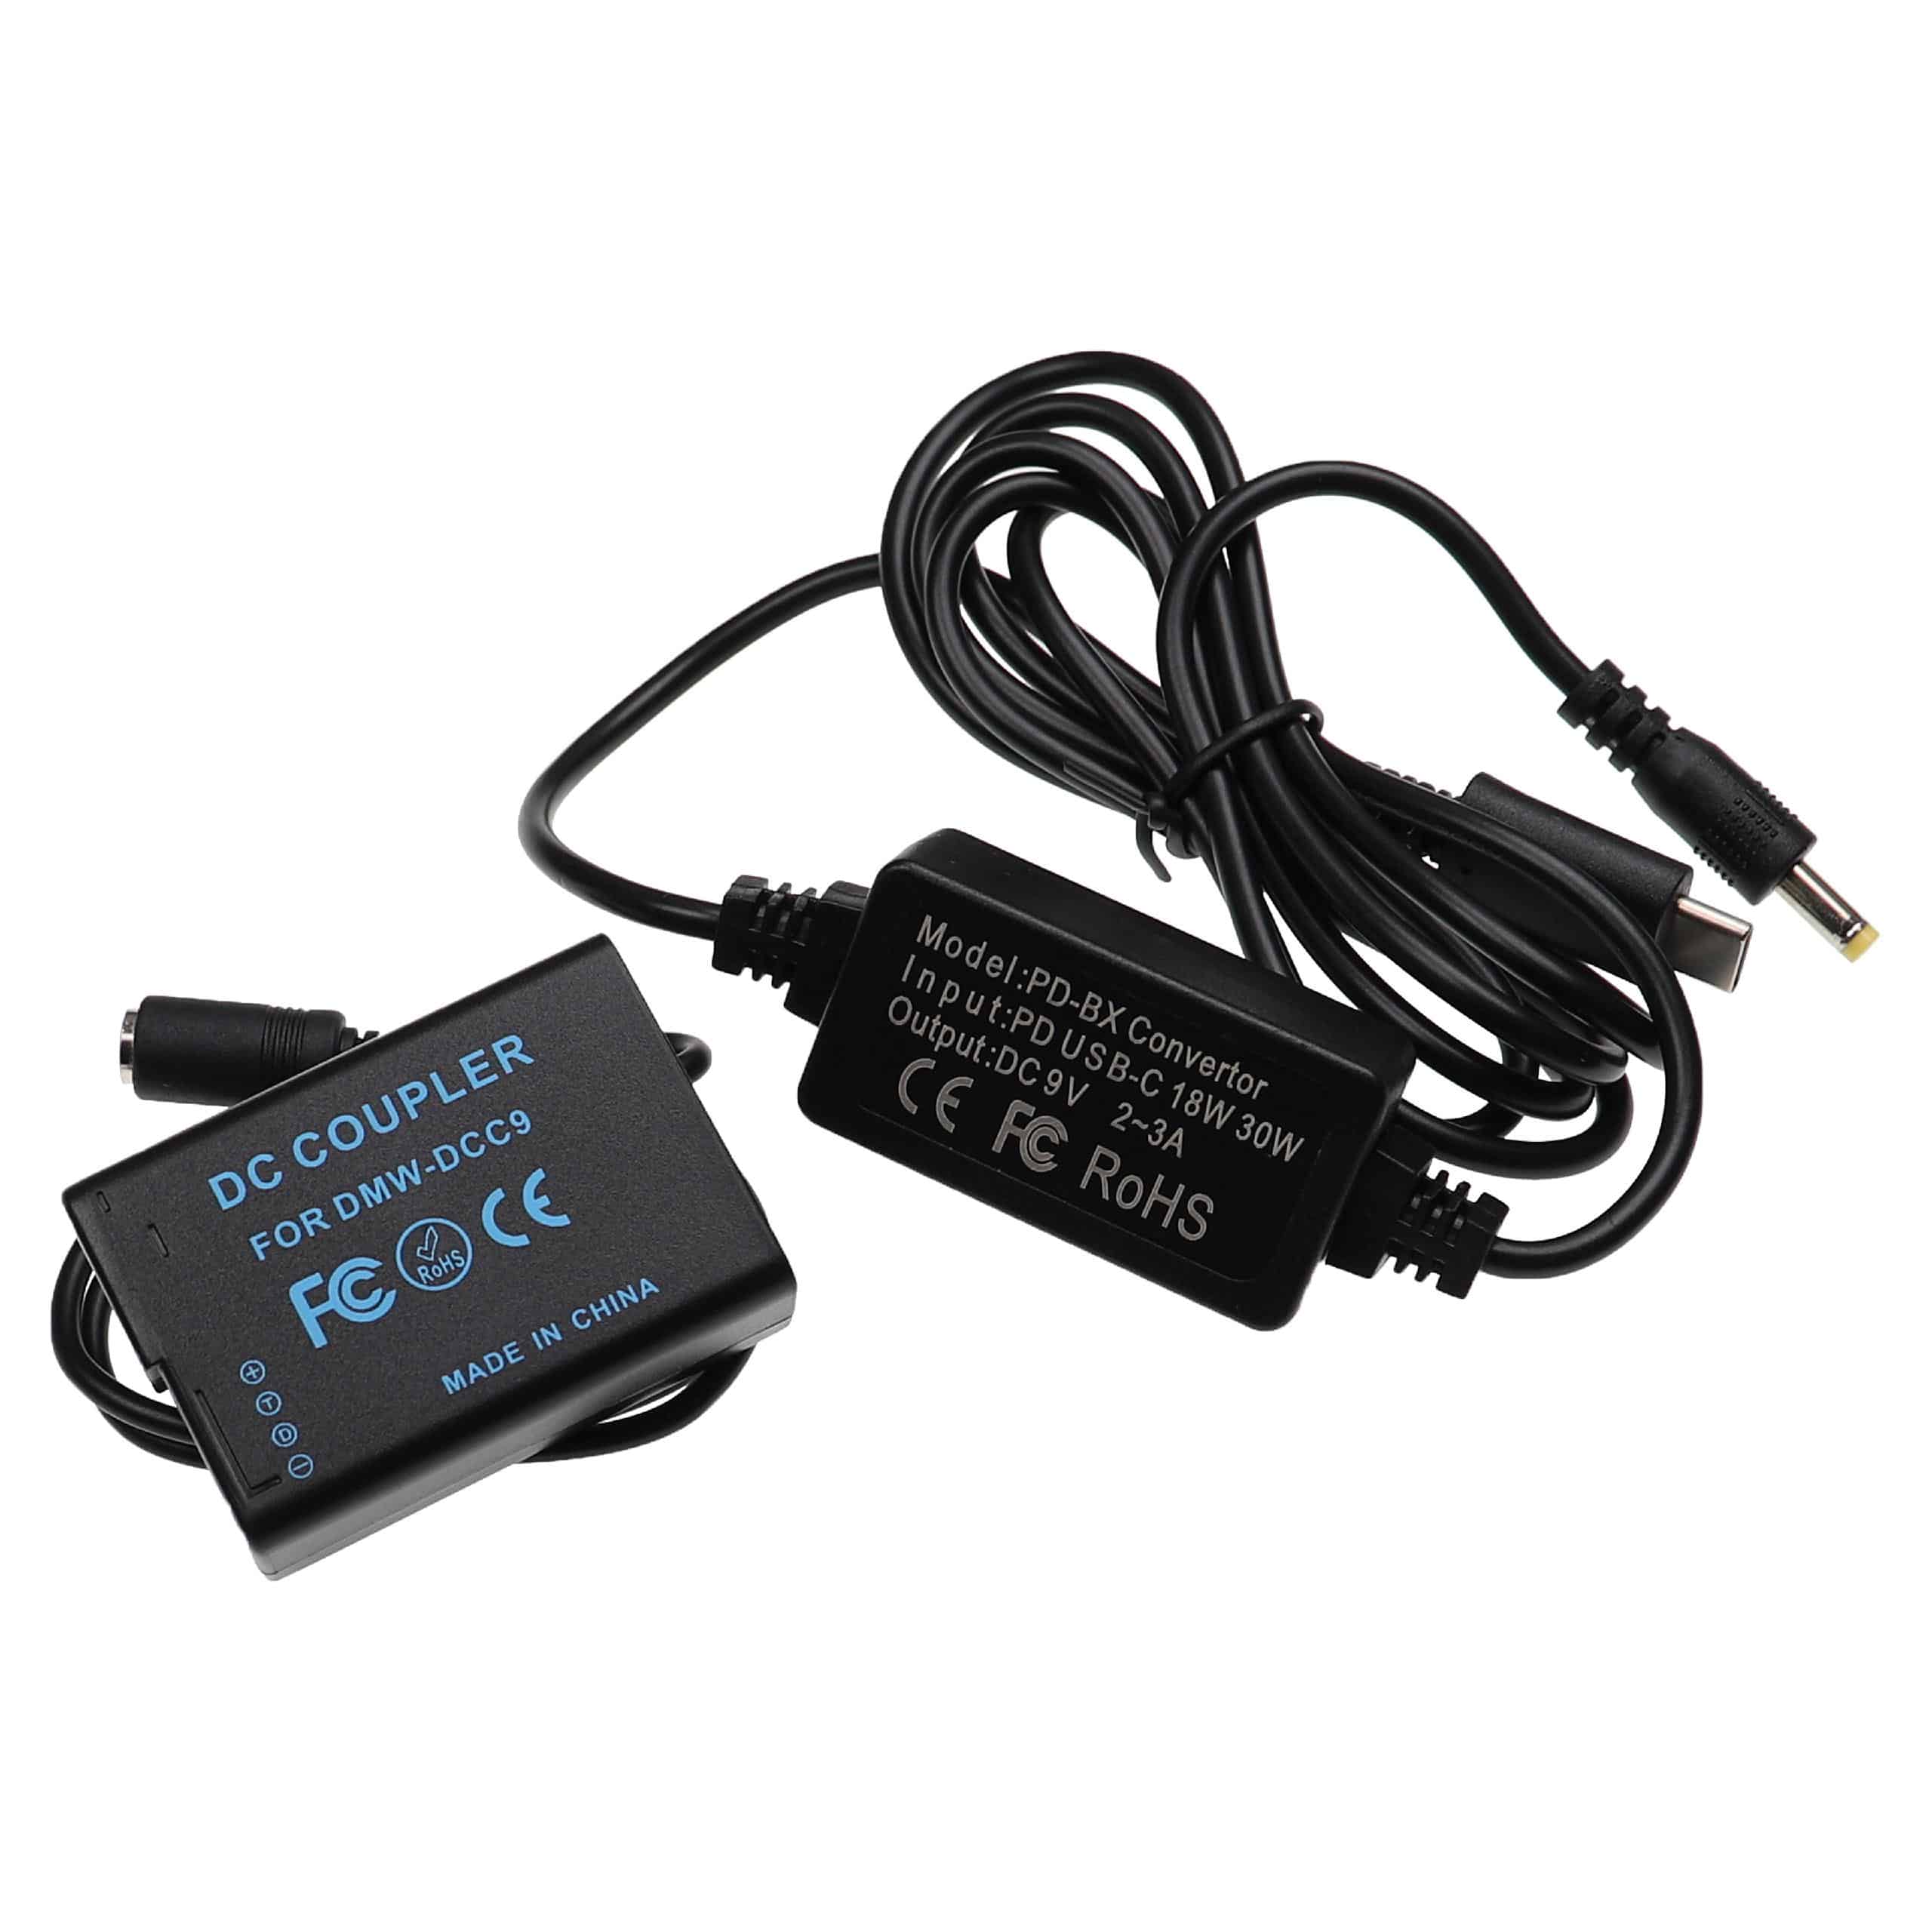 USB Netzteil als Ersatz für Panasonic DMW-AC8EG, DMW-AC8 für Kamera + DC Kuppler ersetzt Panasonic DMW-DCC9